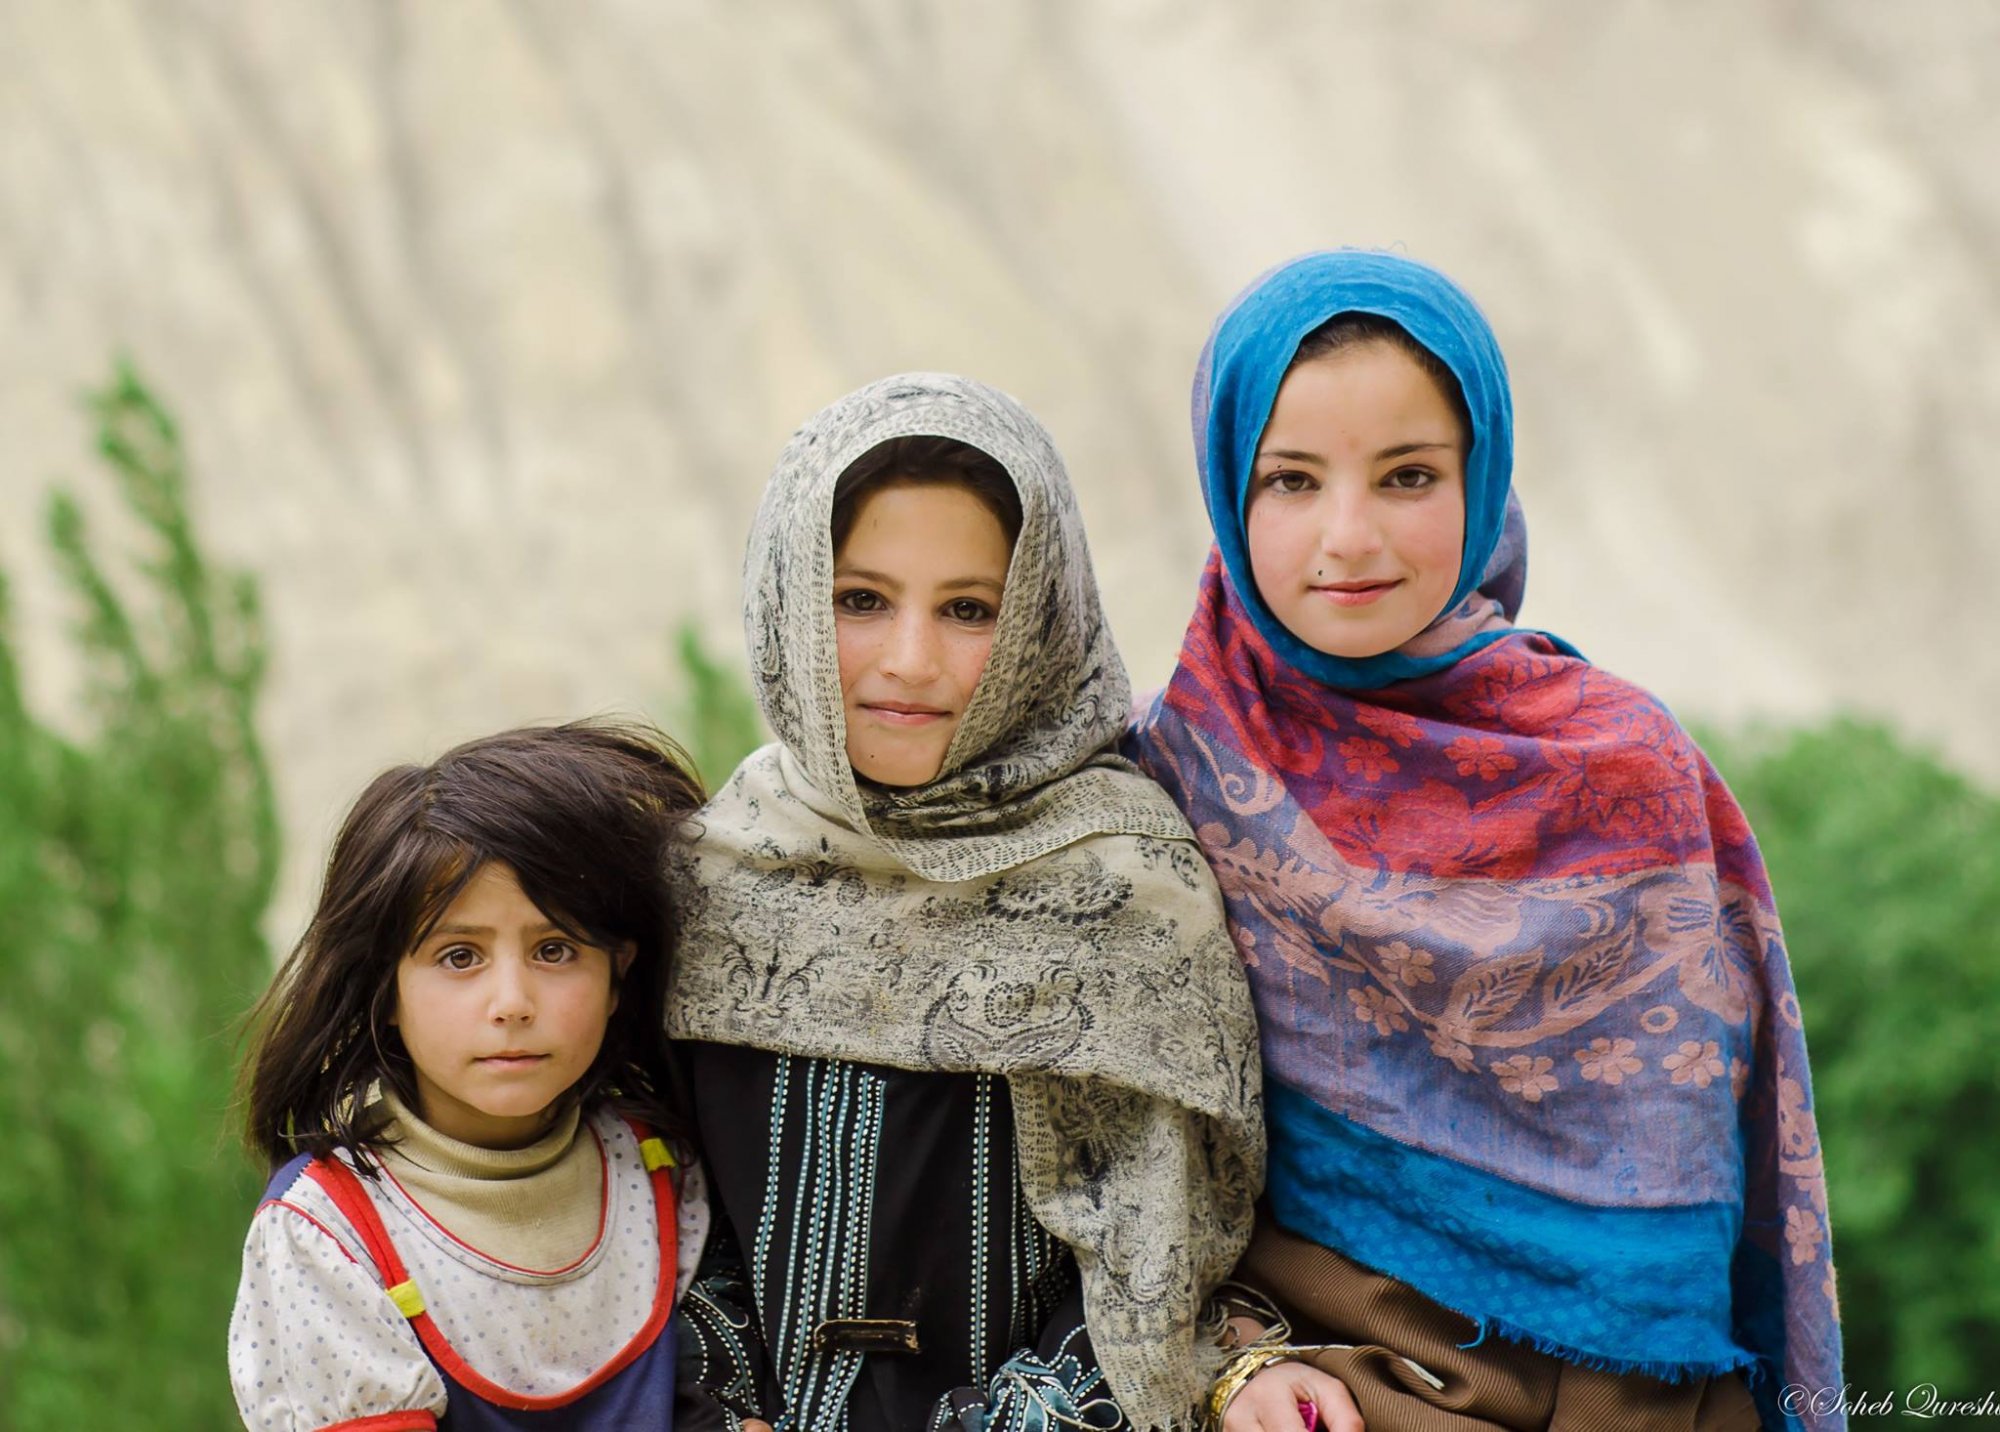 Girls of Gilgit Pakistan from Hopar valley.-2016-10-20.jpg